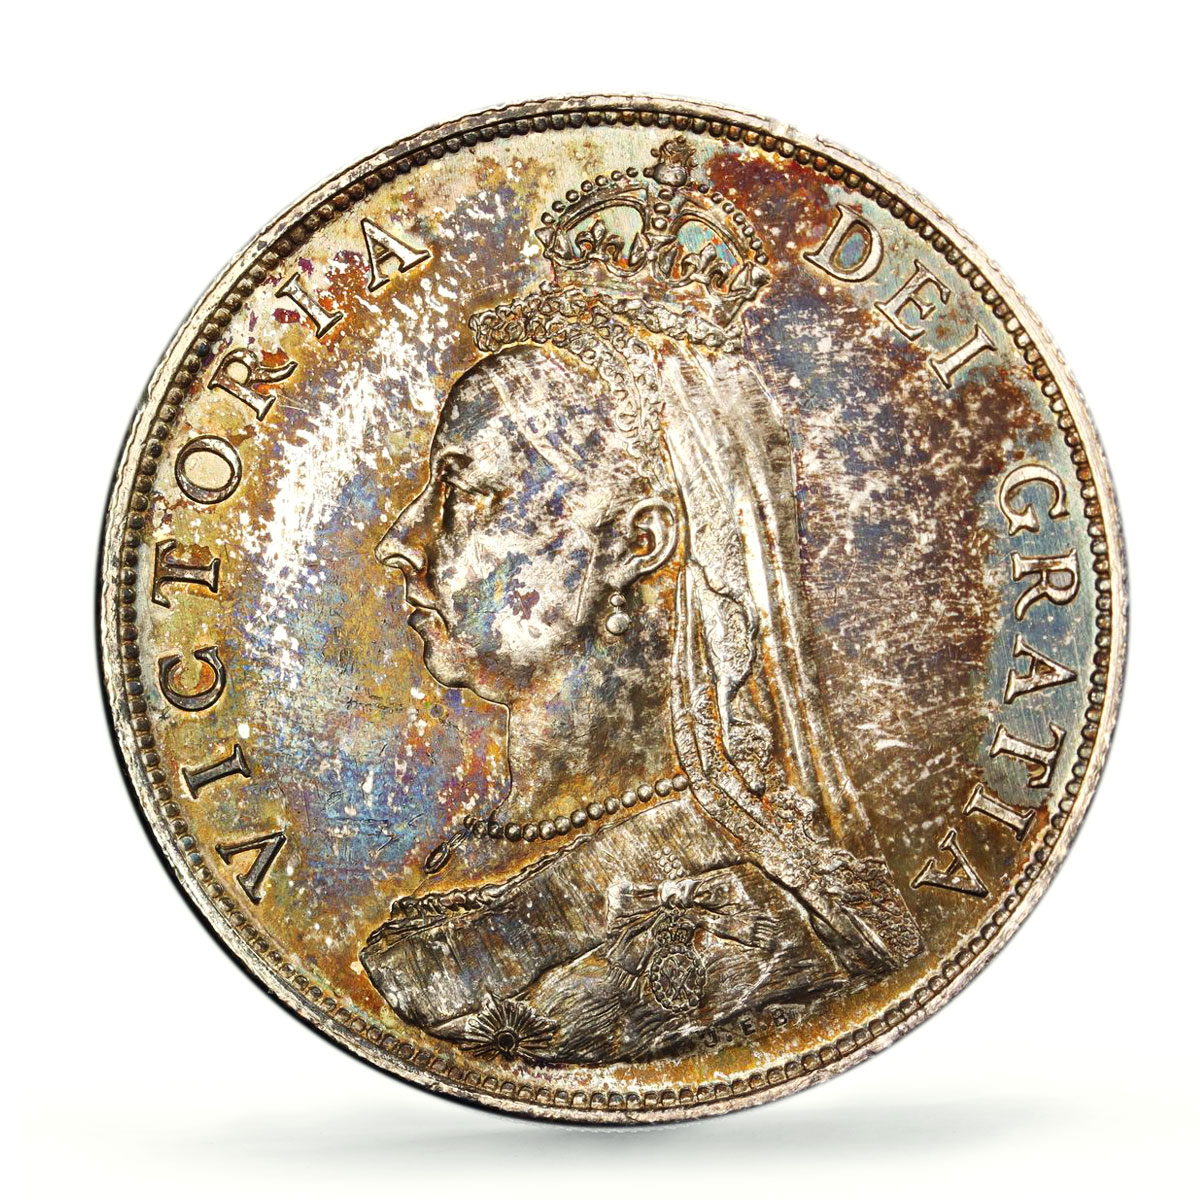 Great Britain 1 florin Regular Coinage Queen Victoria AU PCGS silver coin 1887